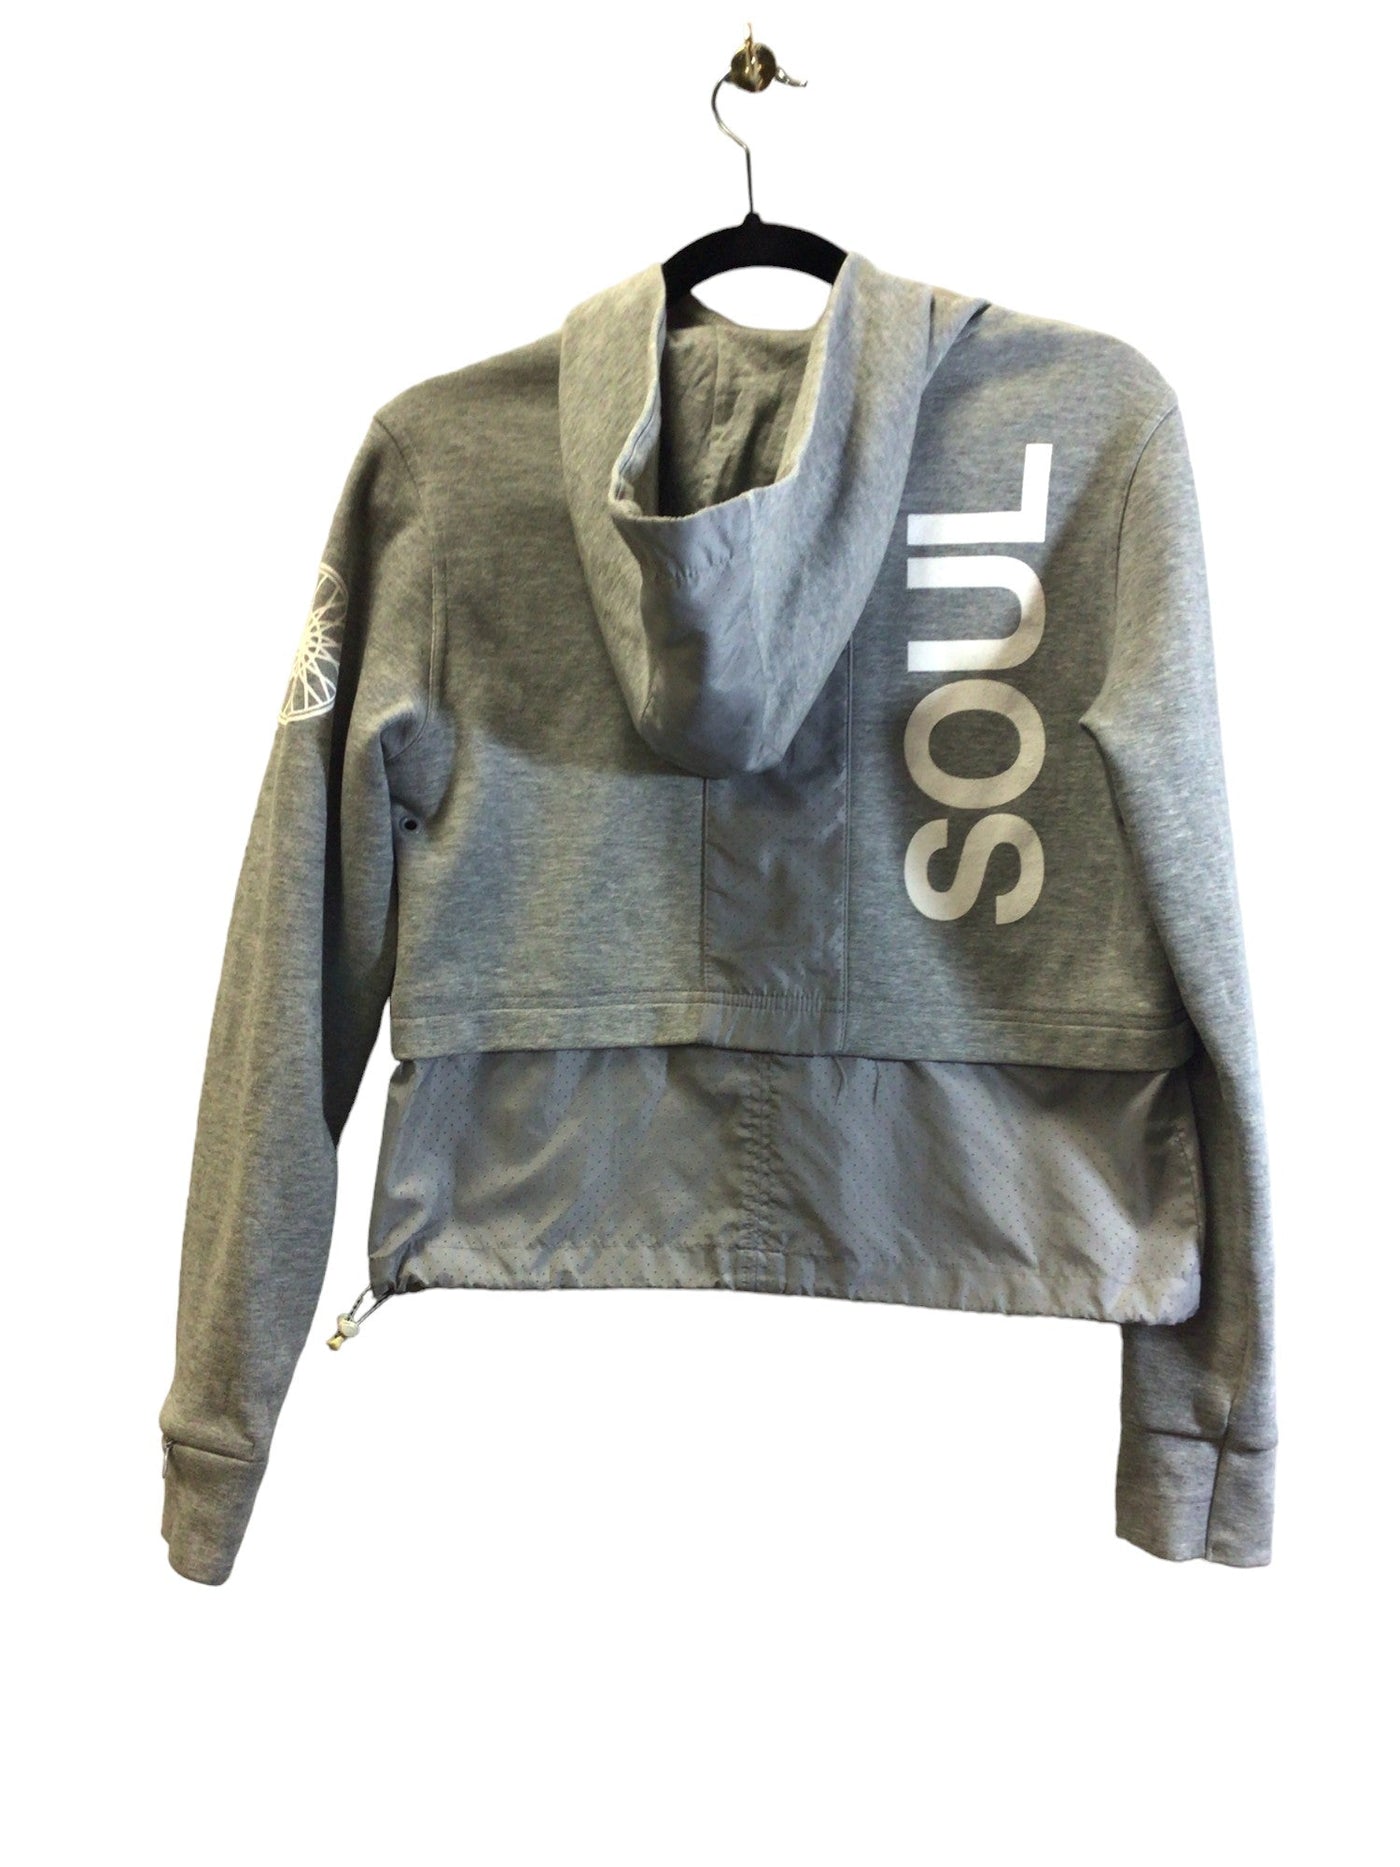 NIKE Women Activewear Jackets Regular fit in Gray - Size S | 16.5 $ KOOP